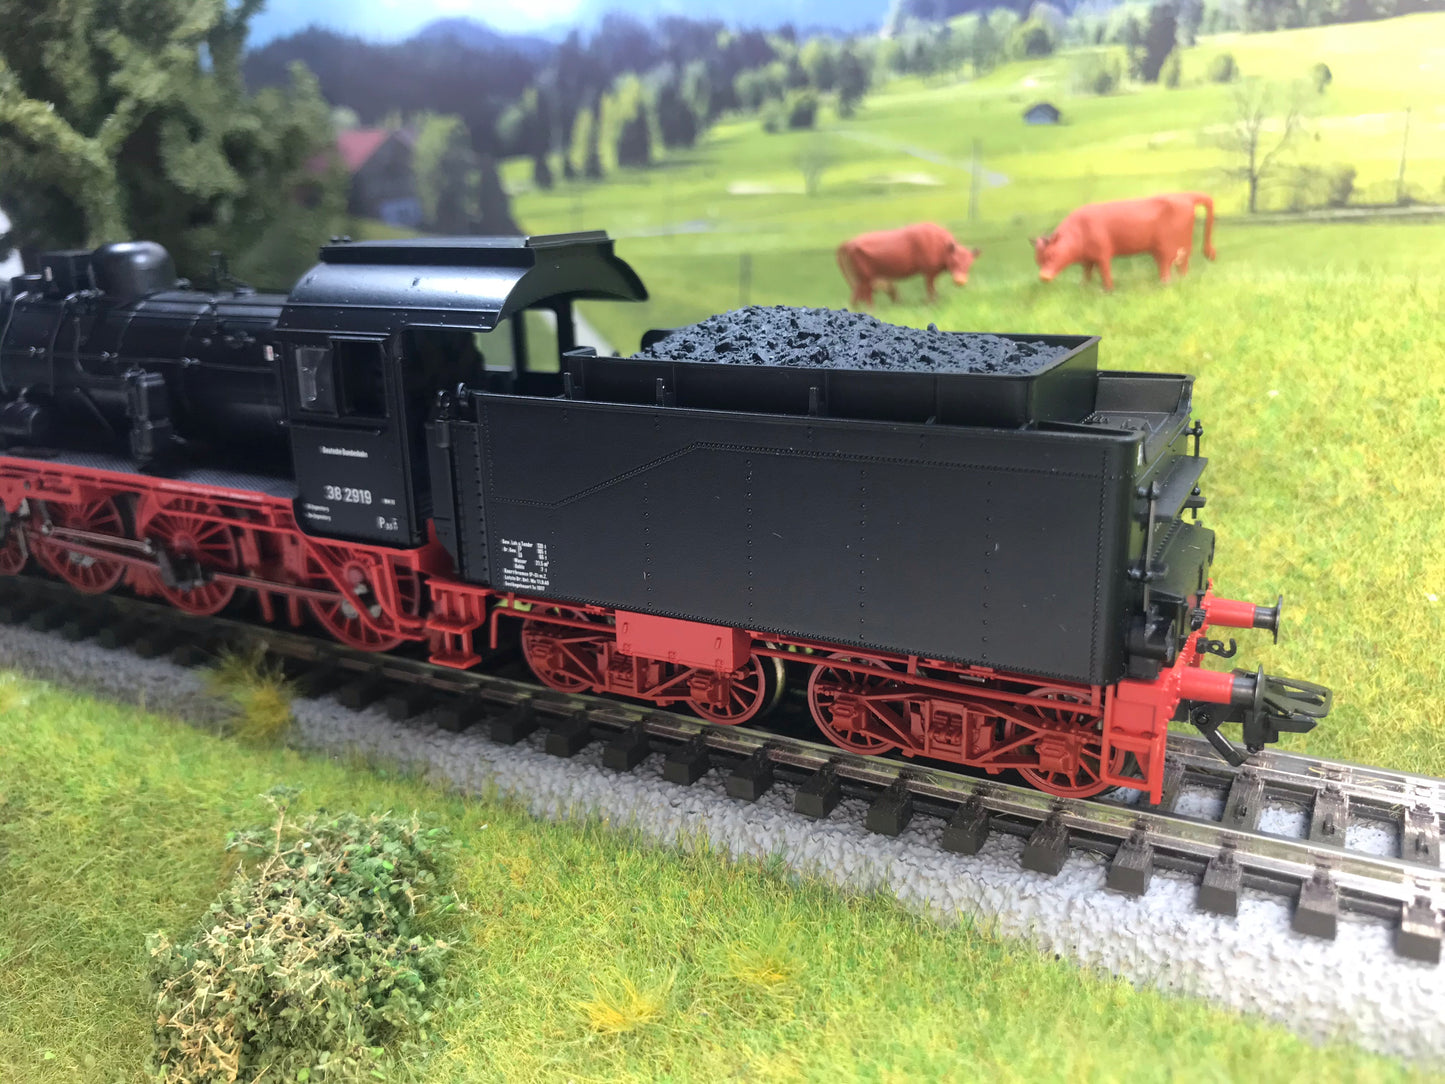 Marklin 39380 - Class 38 Steam Locomotive